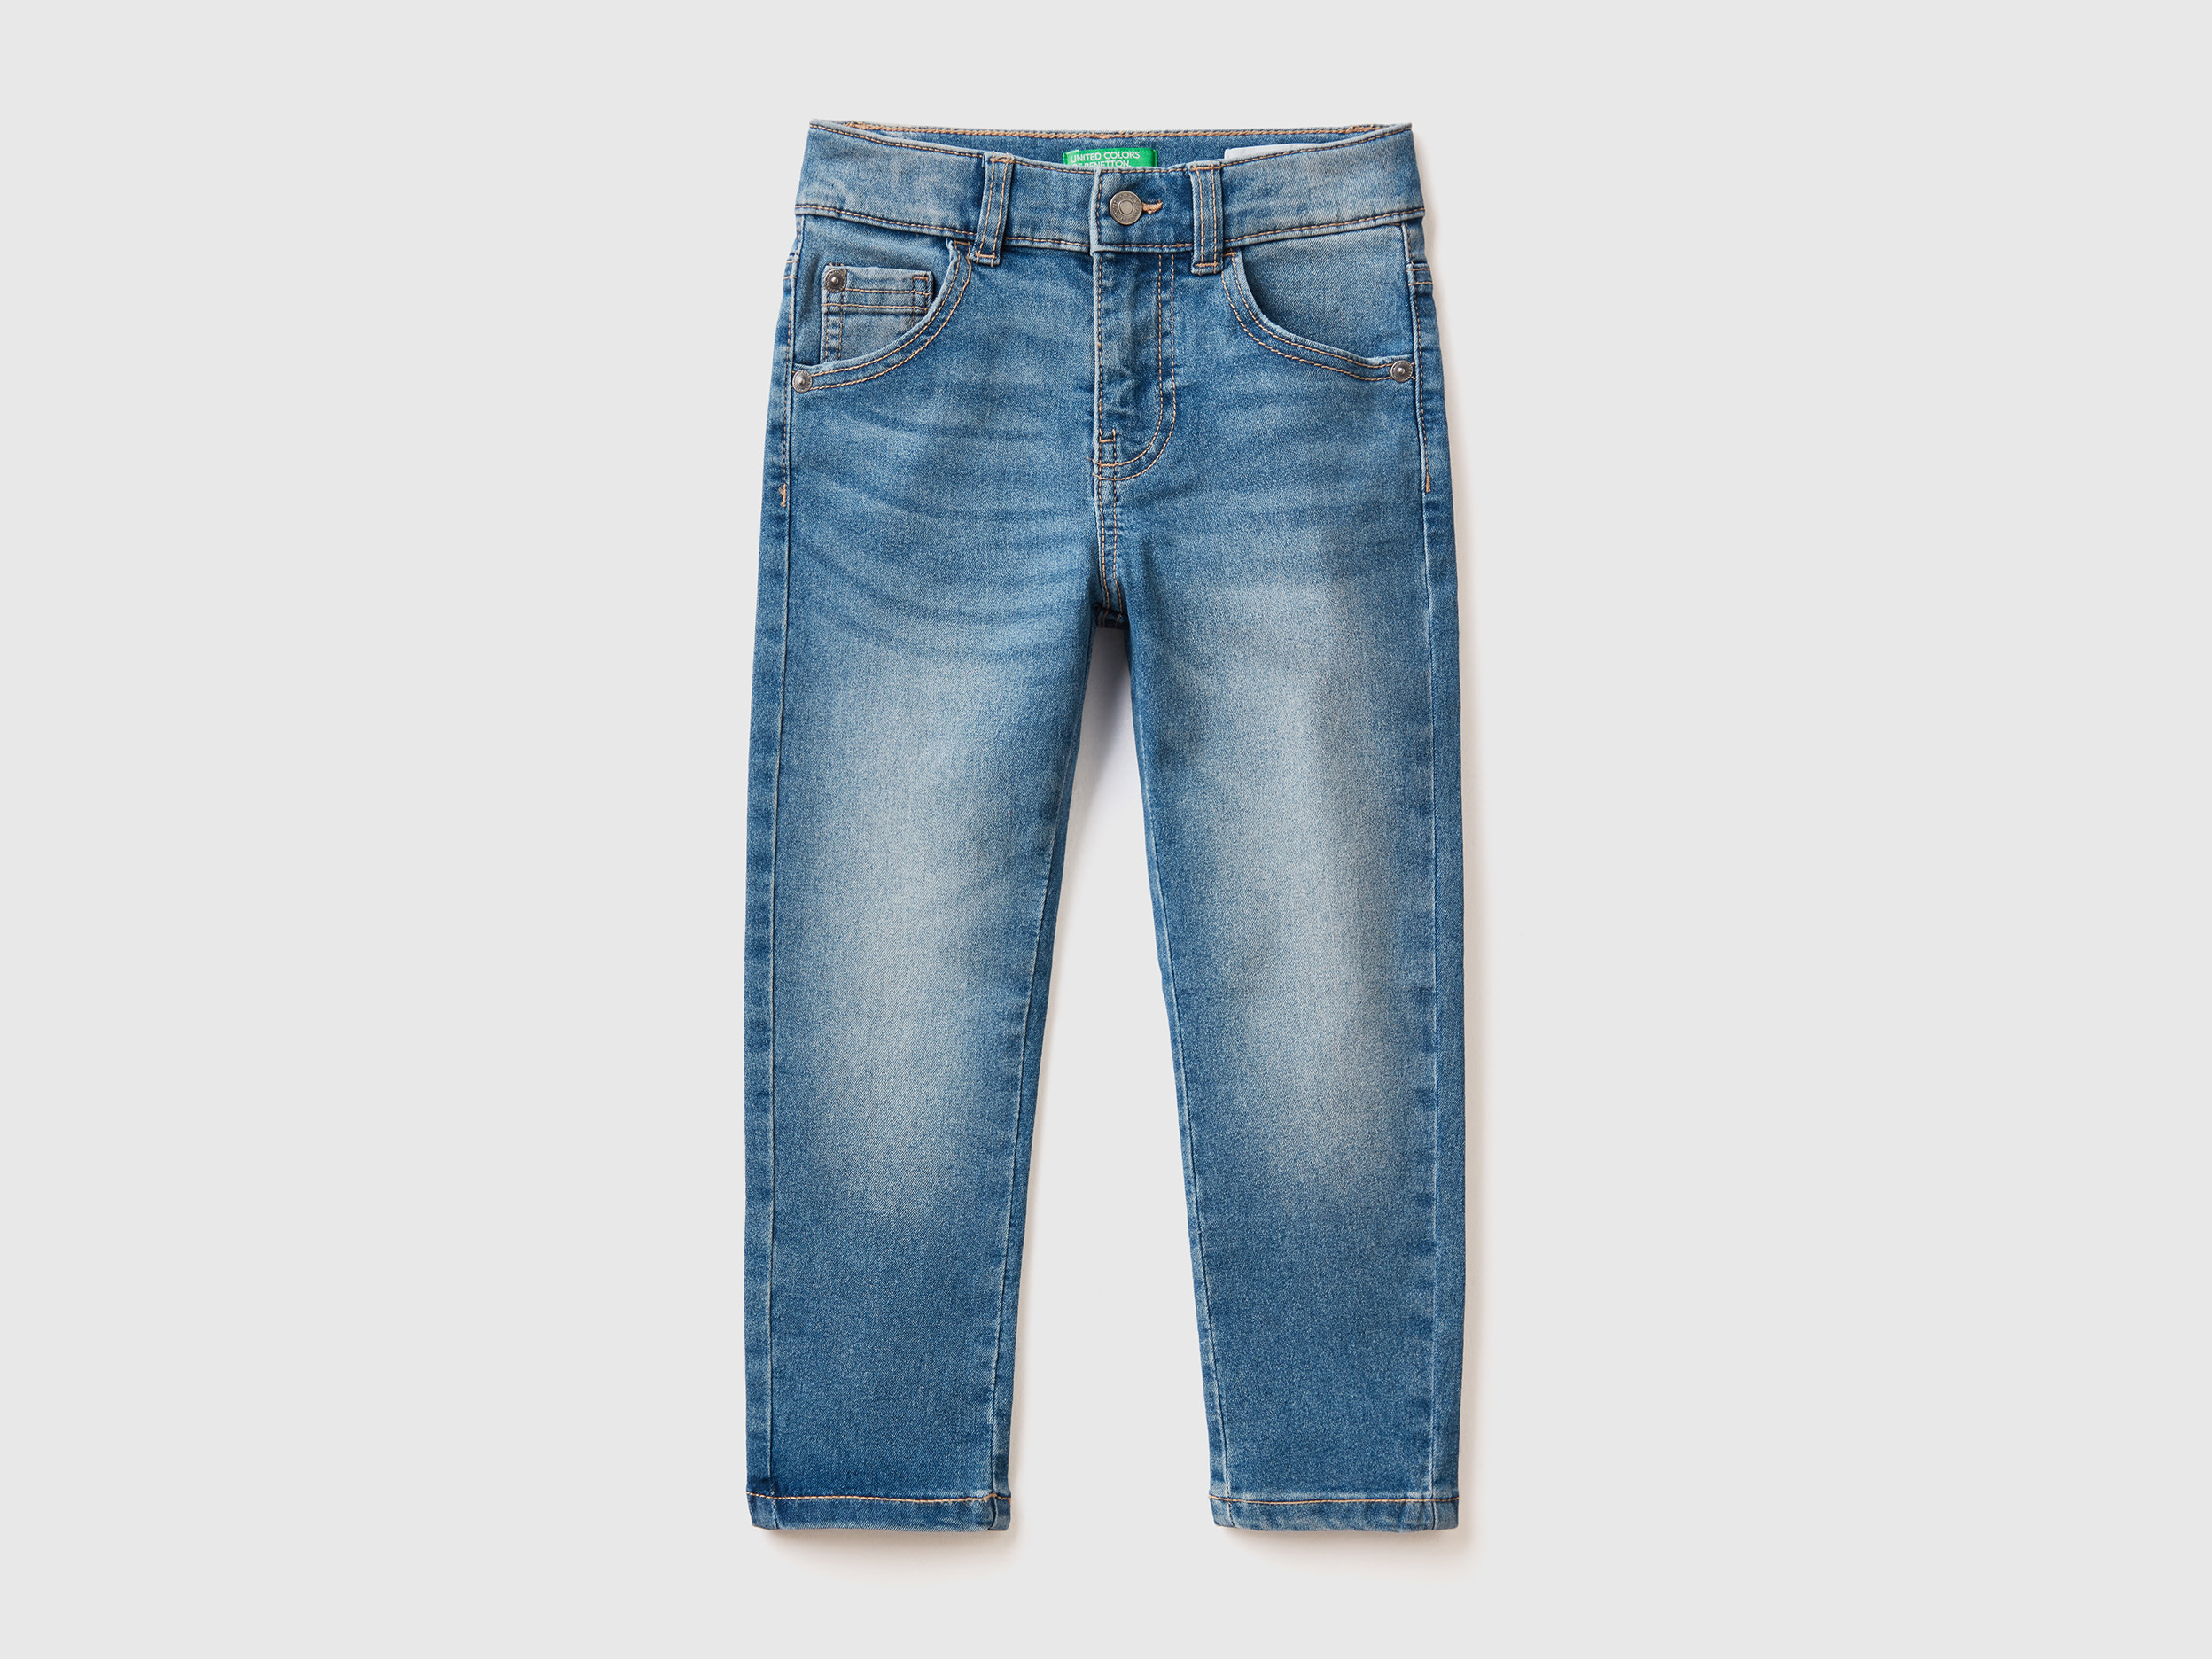 Benetton, Vintage Look Skinny Fit Jeans, size 2-3, Sky Blue, Kids